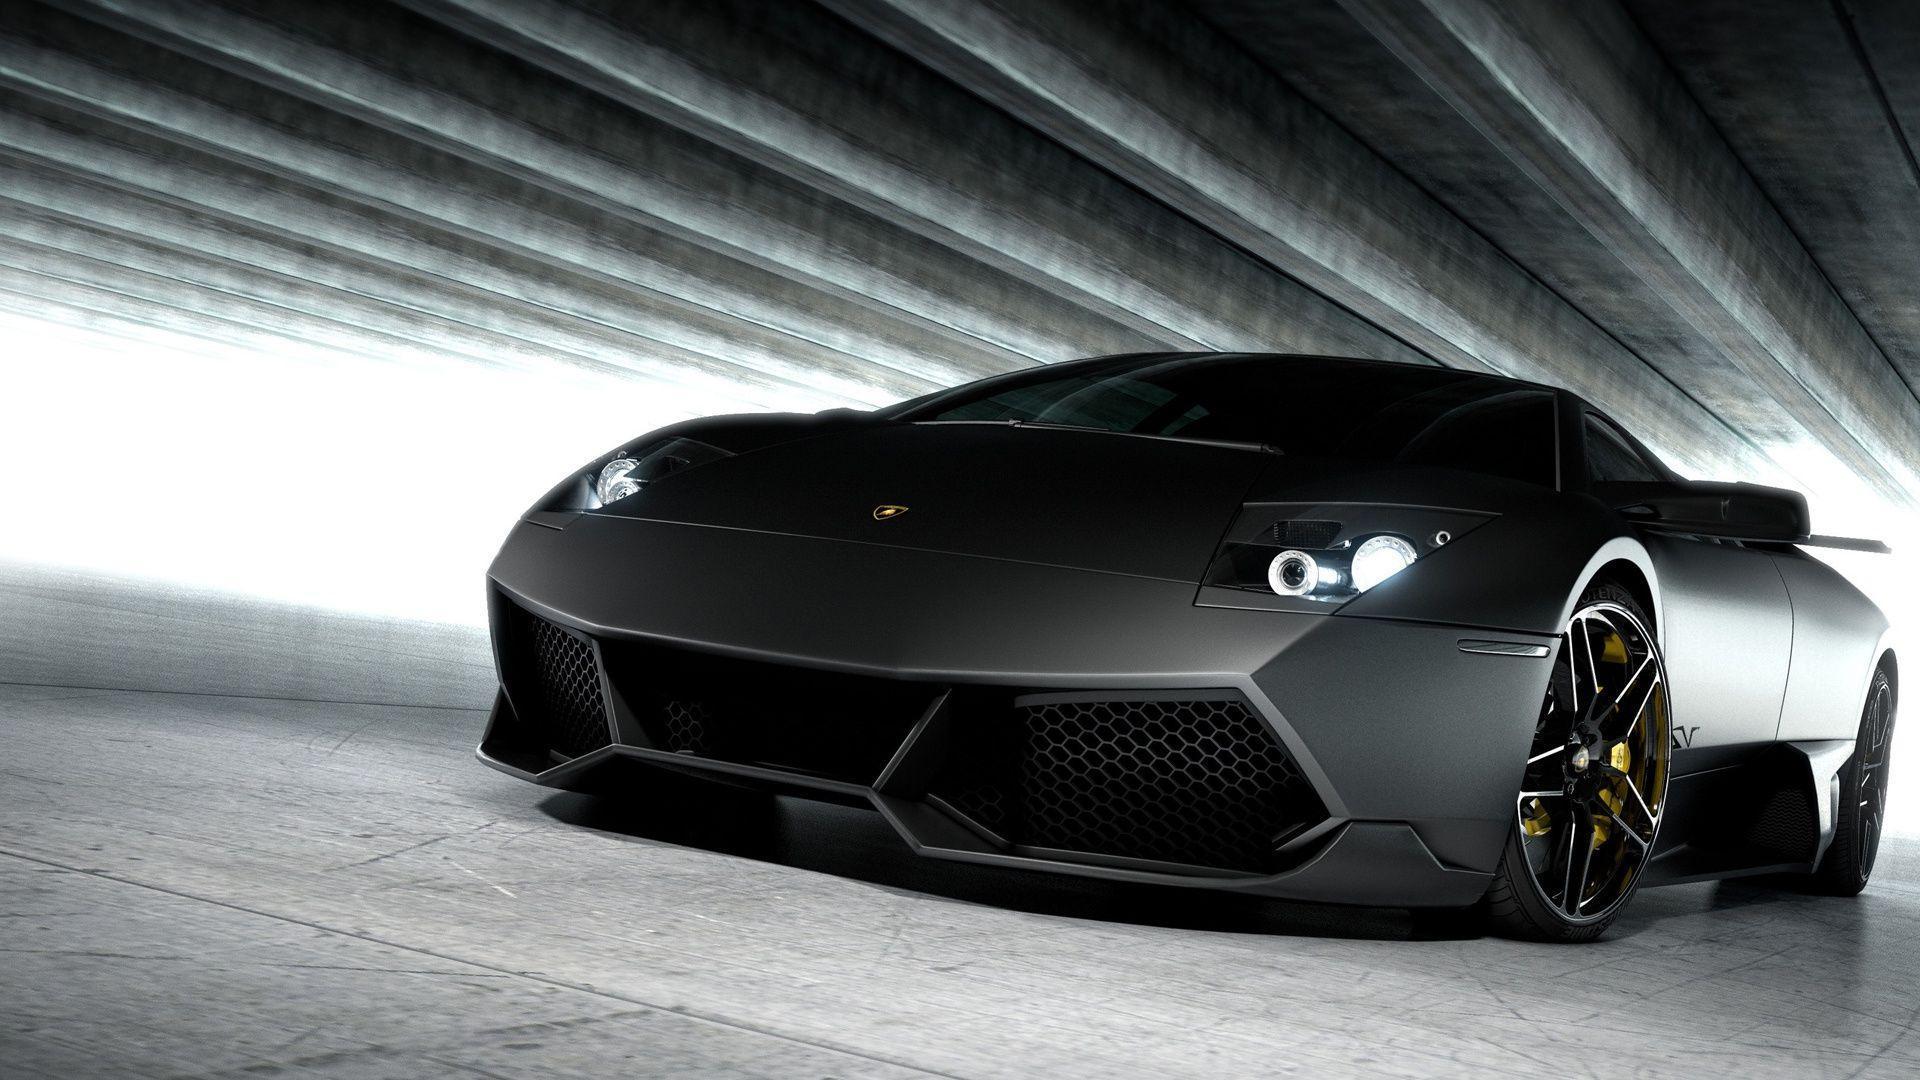 Stunning Lamborghini Wallpaper 1080p Cars. High Quality PC